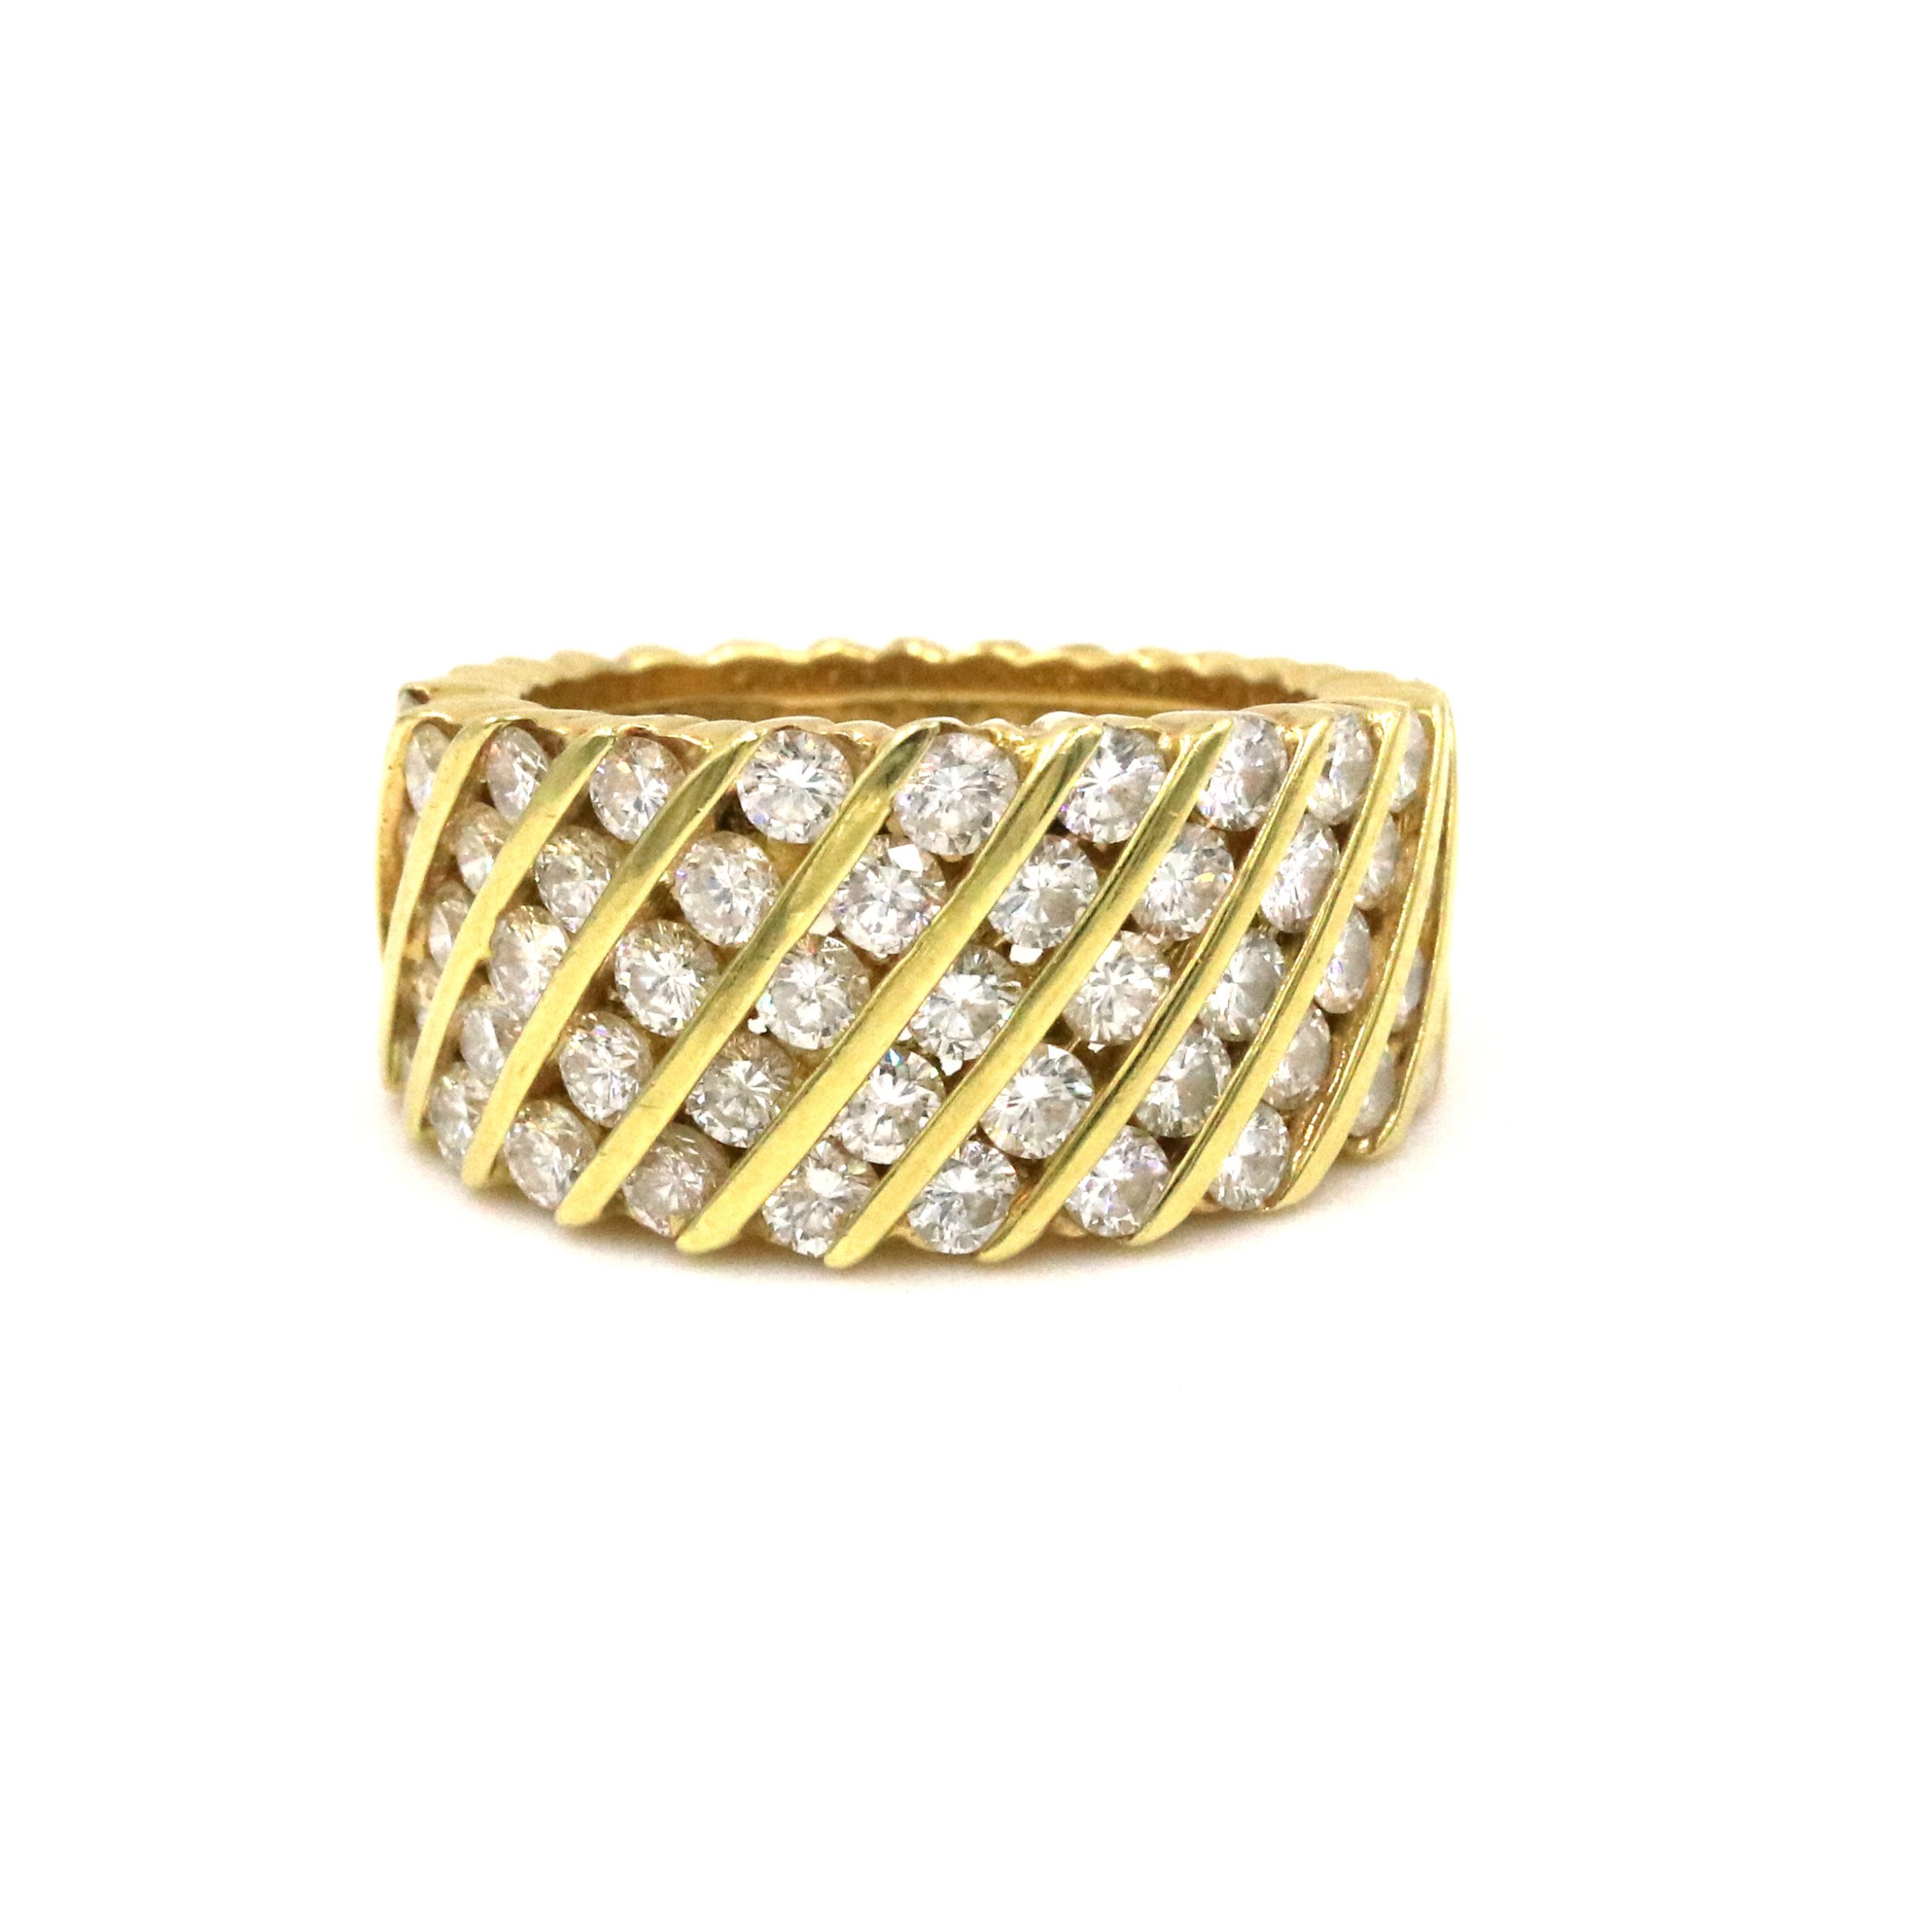 18KY DIAMOND RING - Provident Jewelry